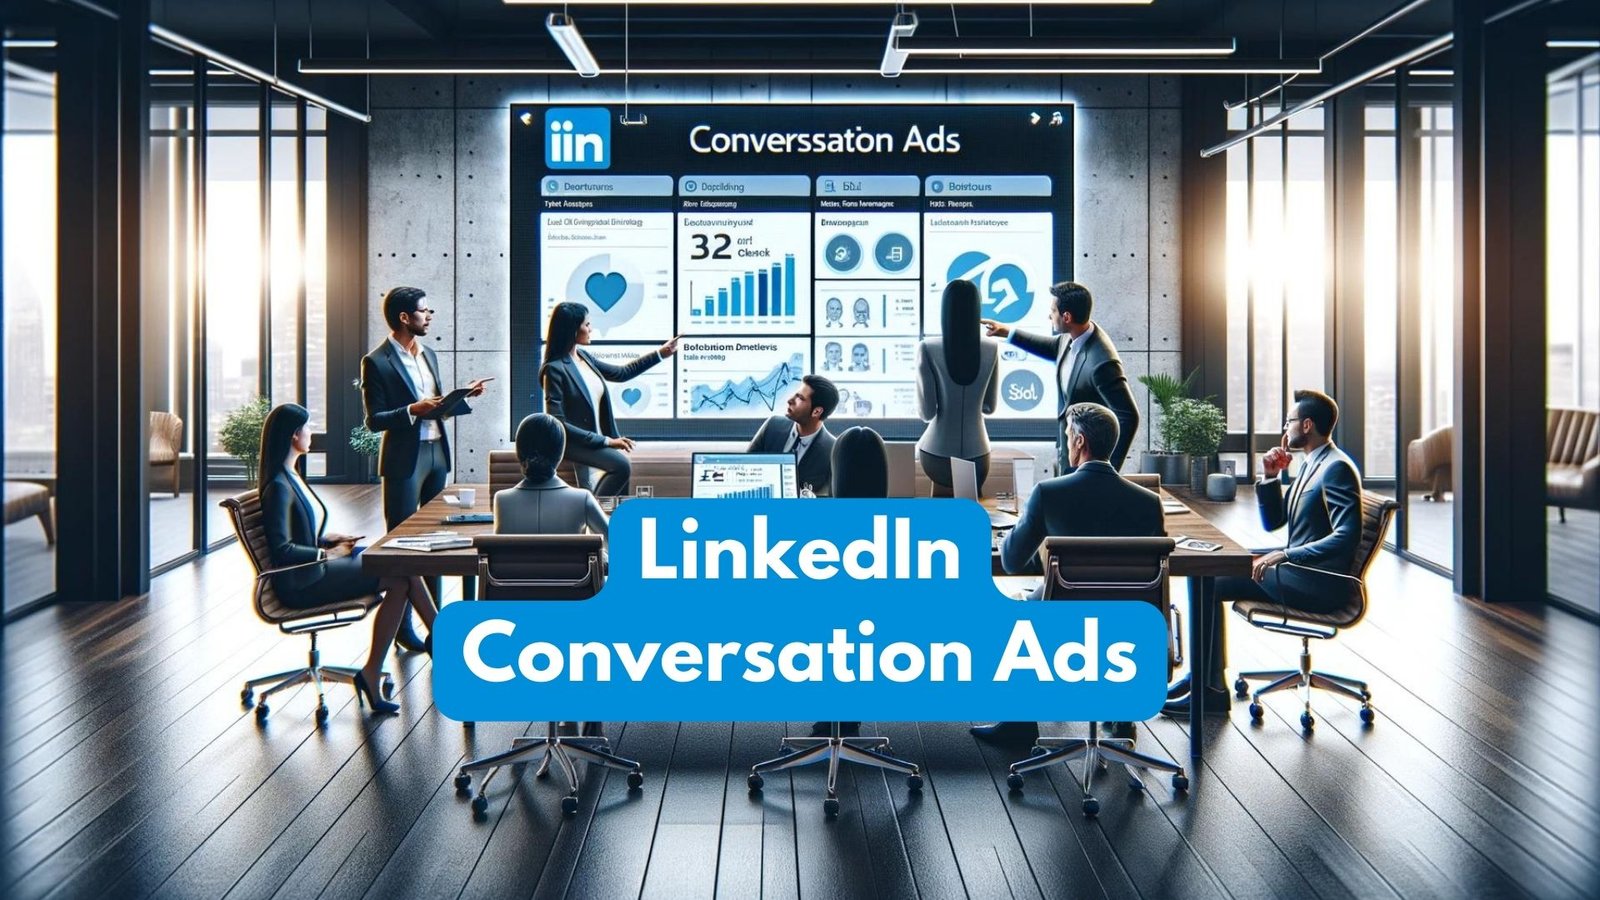 LinkedIn Conversation Ads